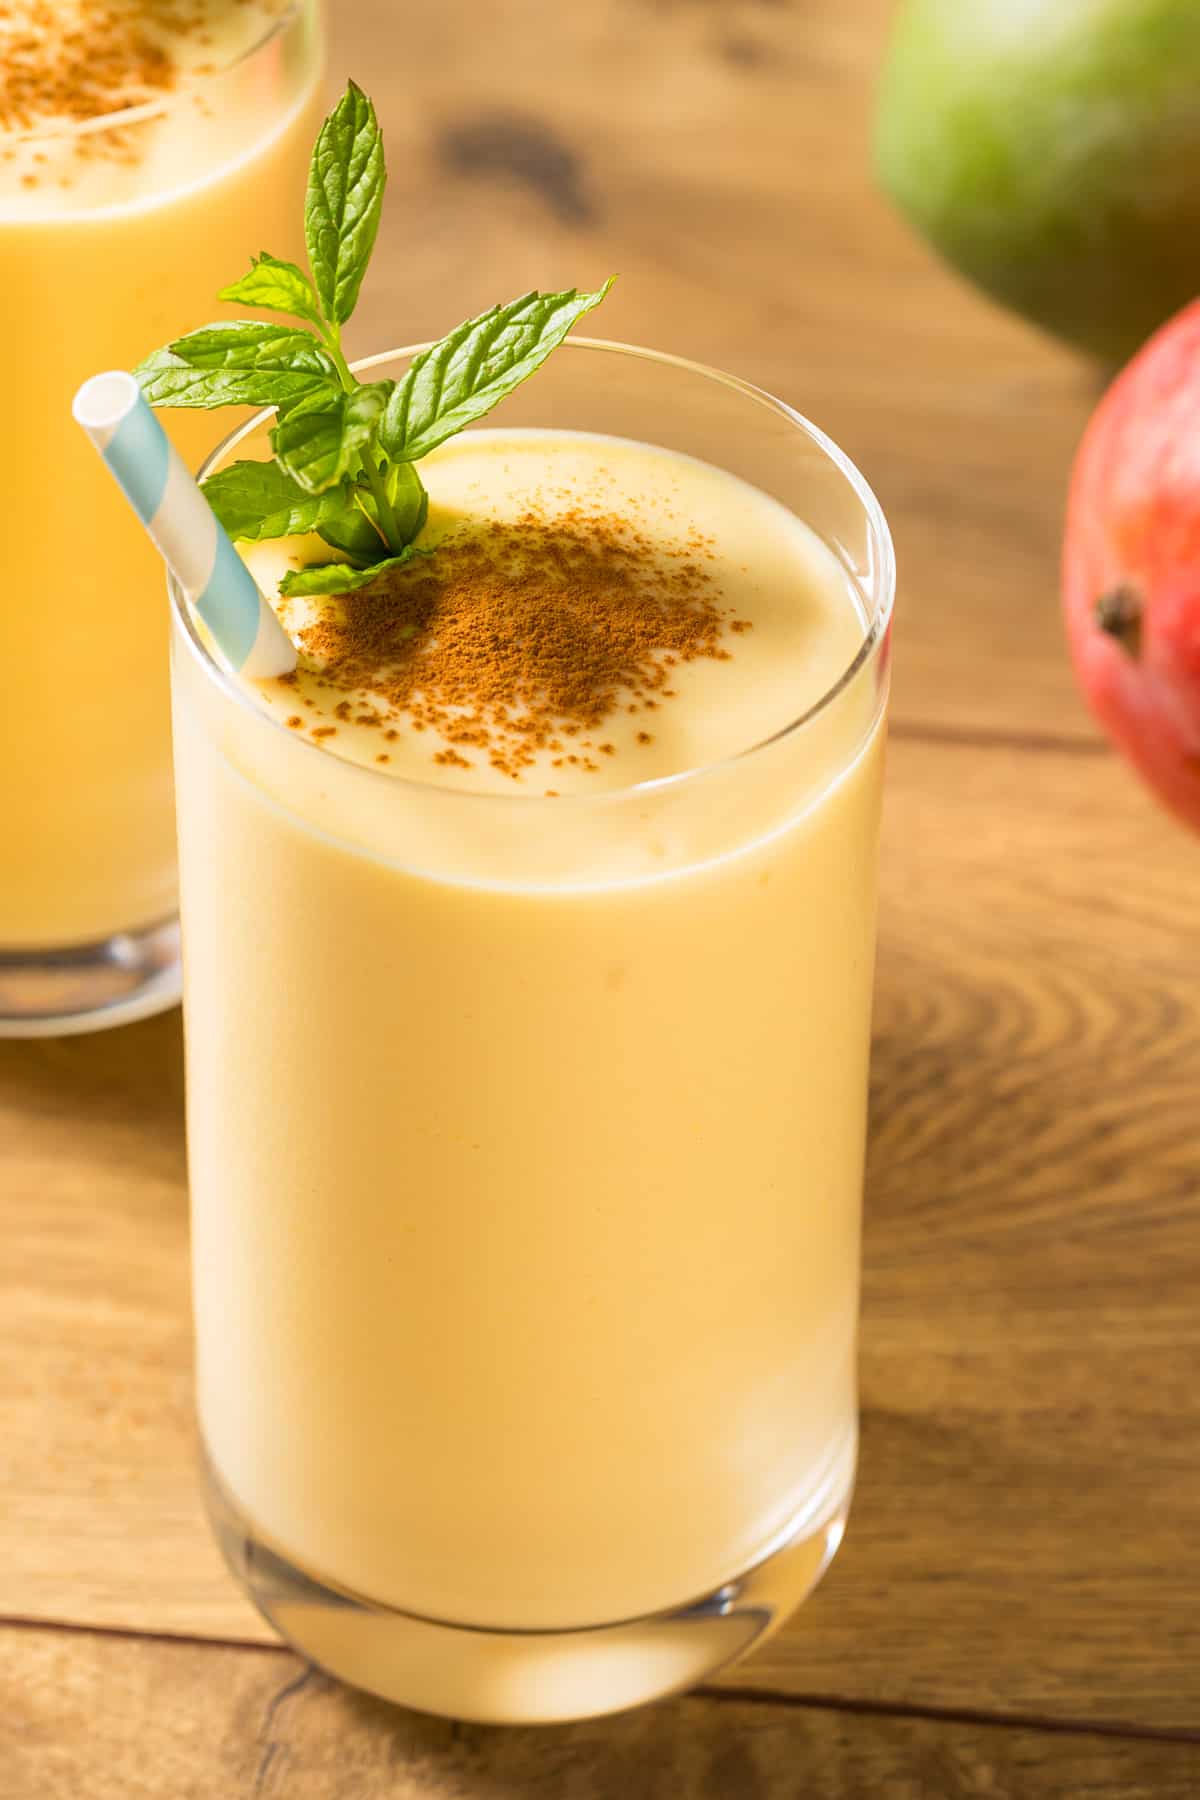 mango lassi recipe authentic traditional indian fruit drink restaurant style cardamom cinnamon yogurt milk